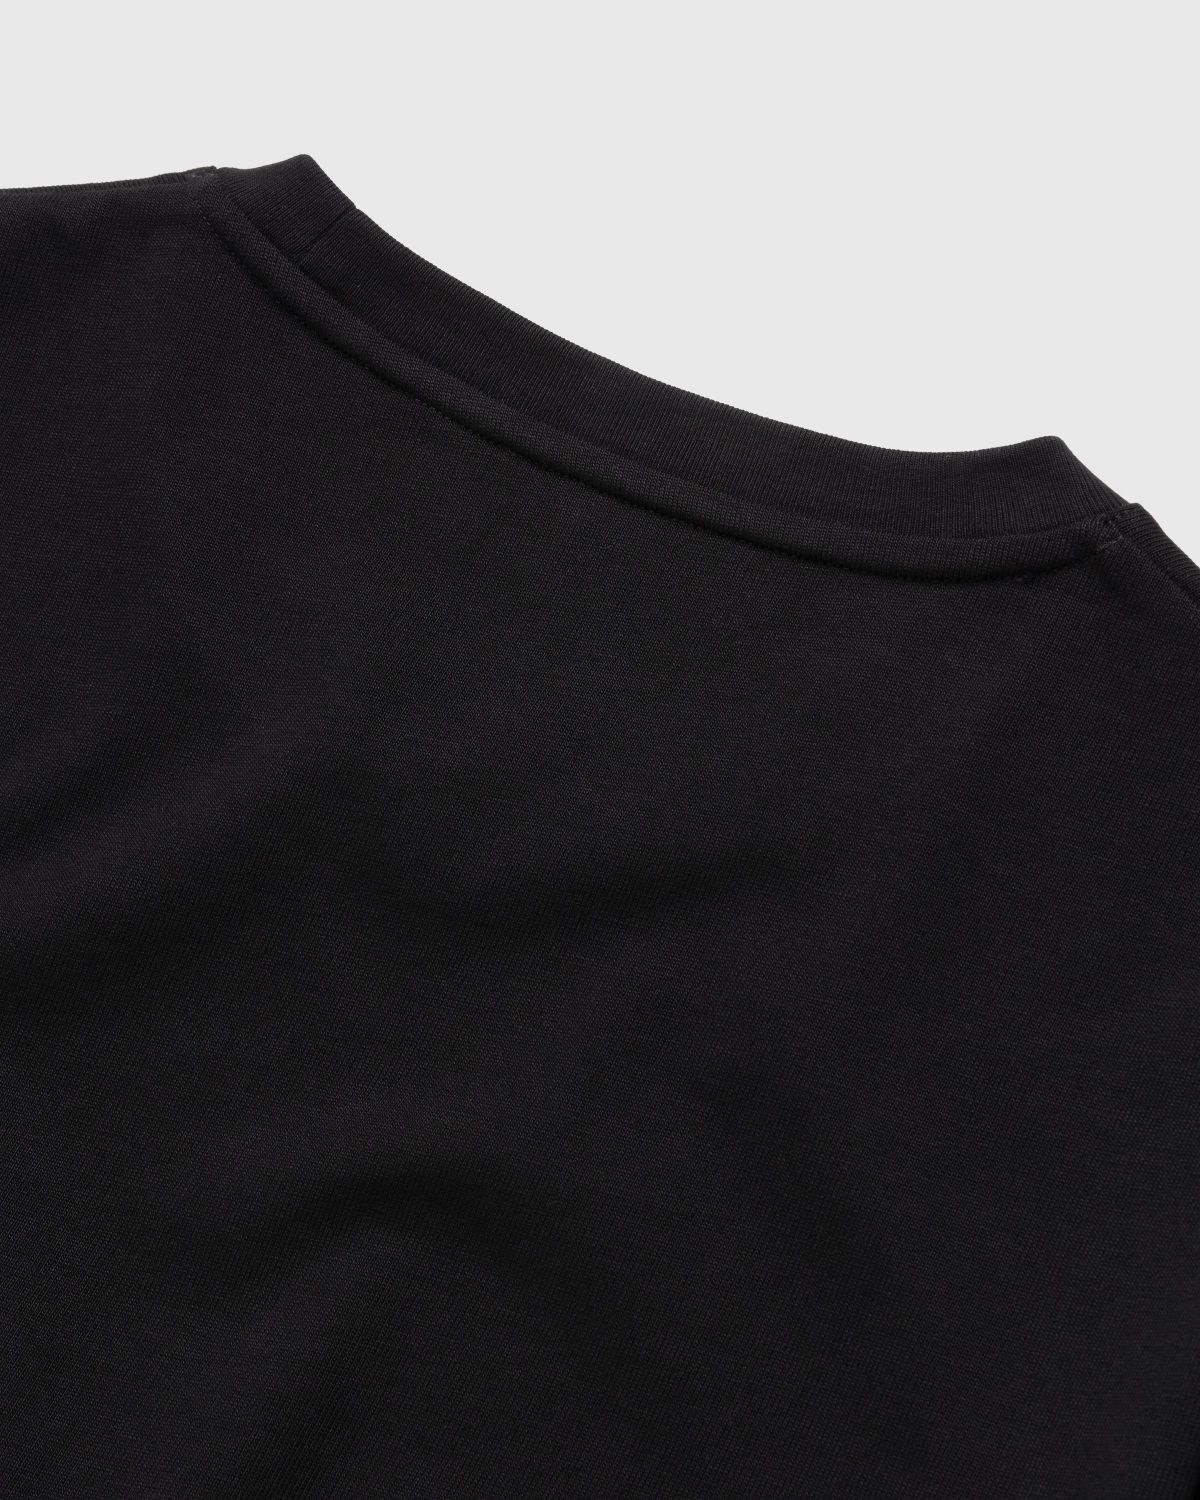 Marine Serre – Organic Cotton T-Shirt Black - Tops - Black - Image 4